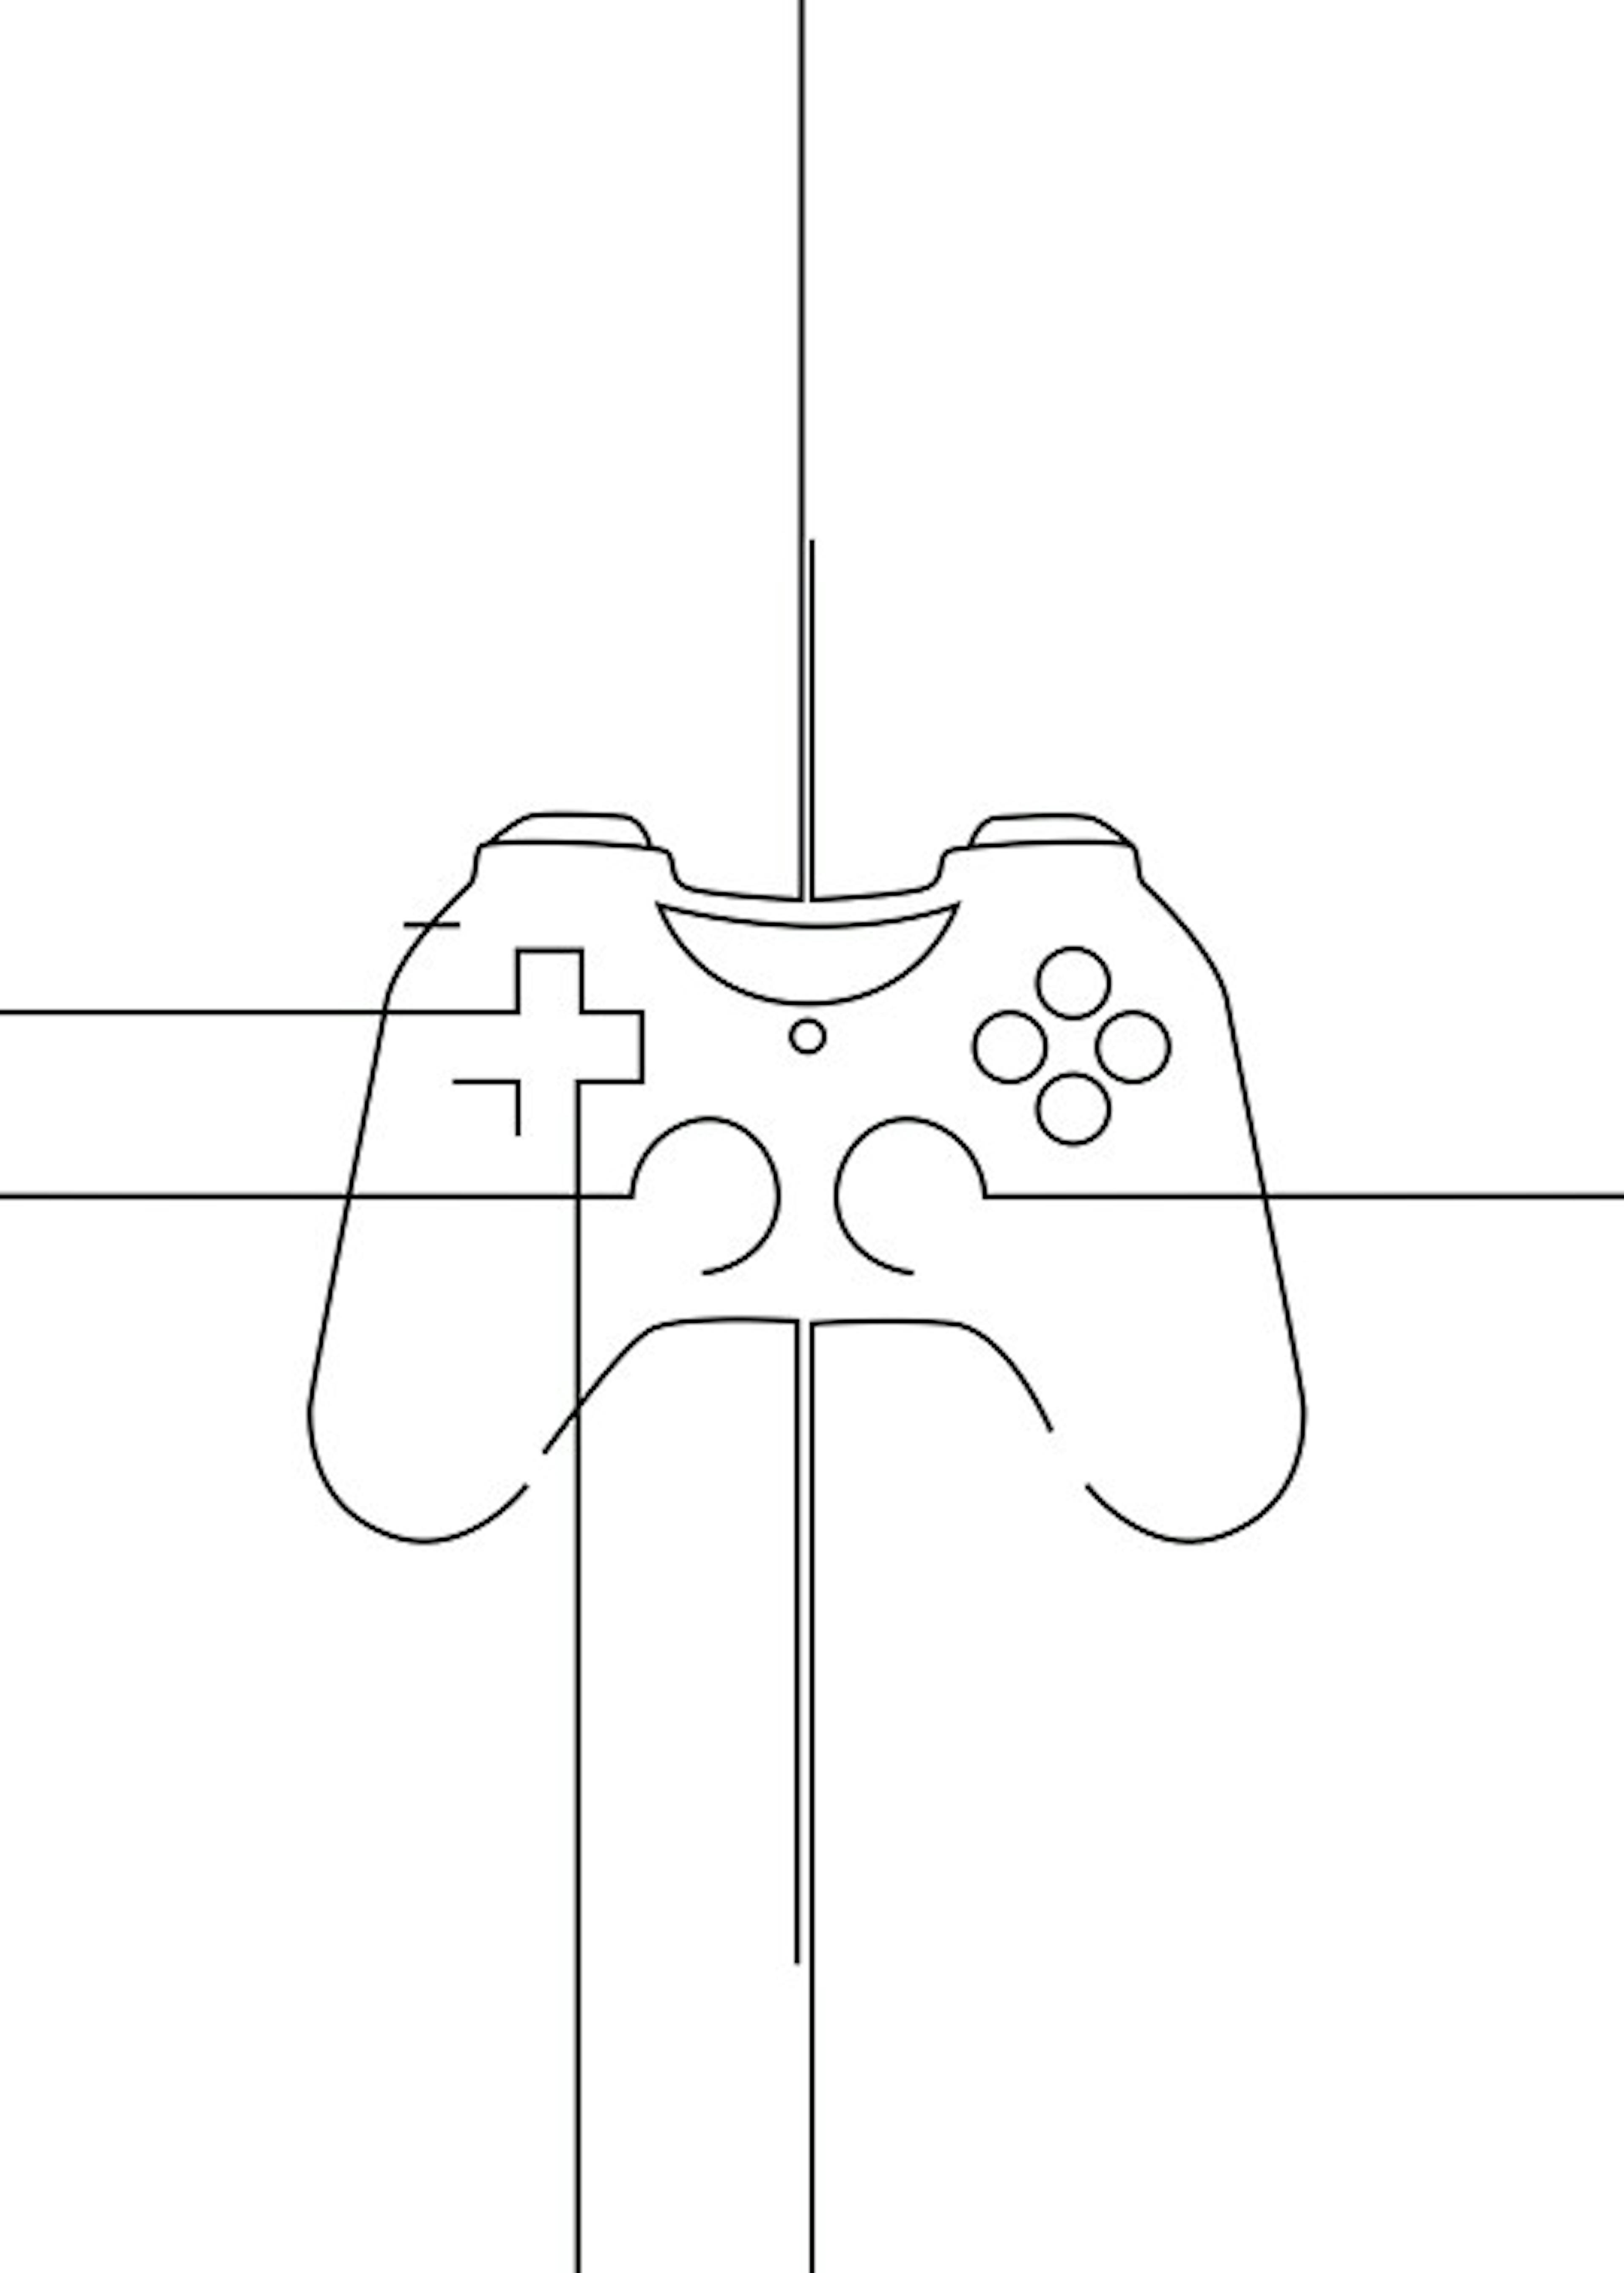 Game Controller Plakát 0